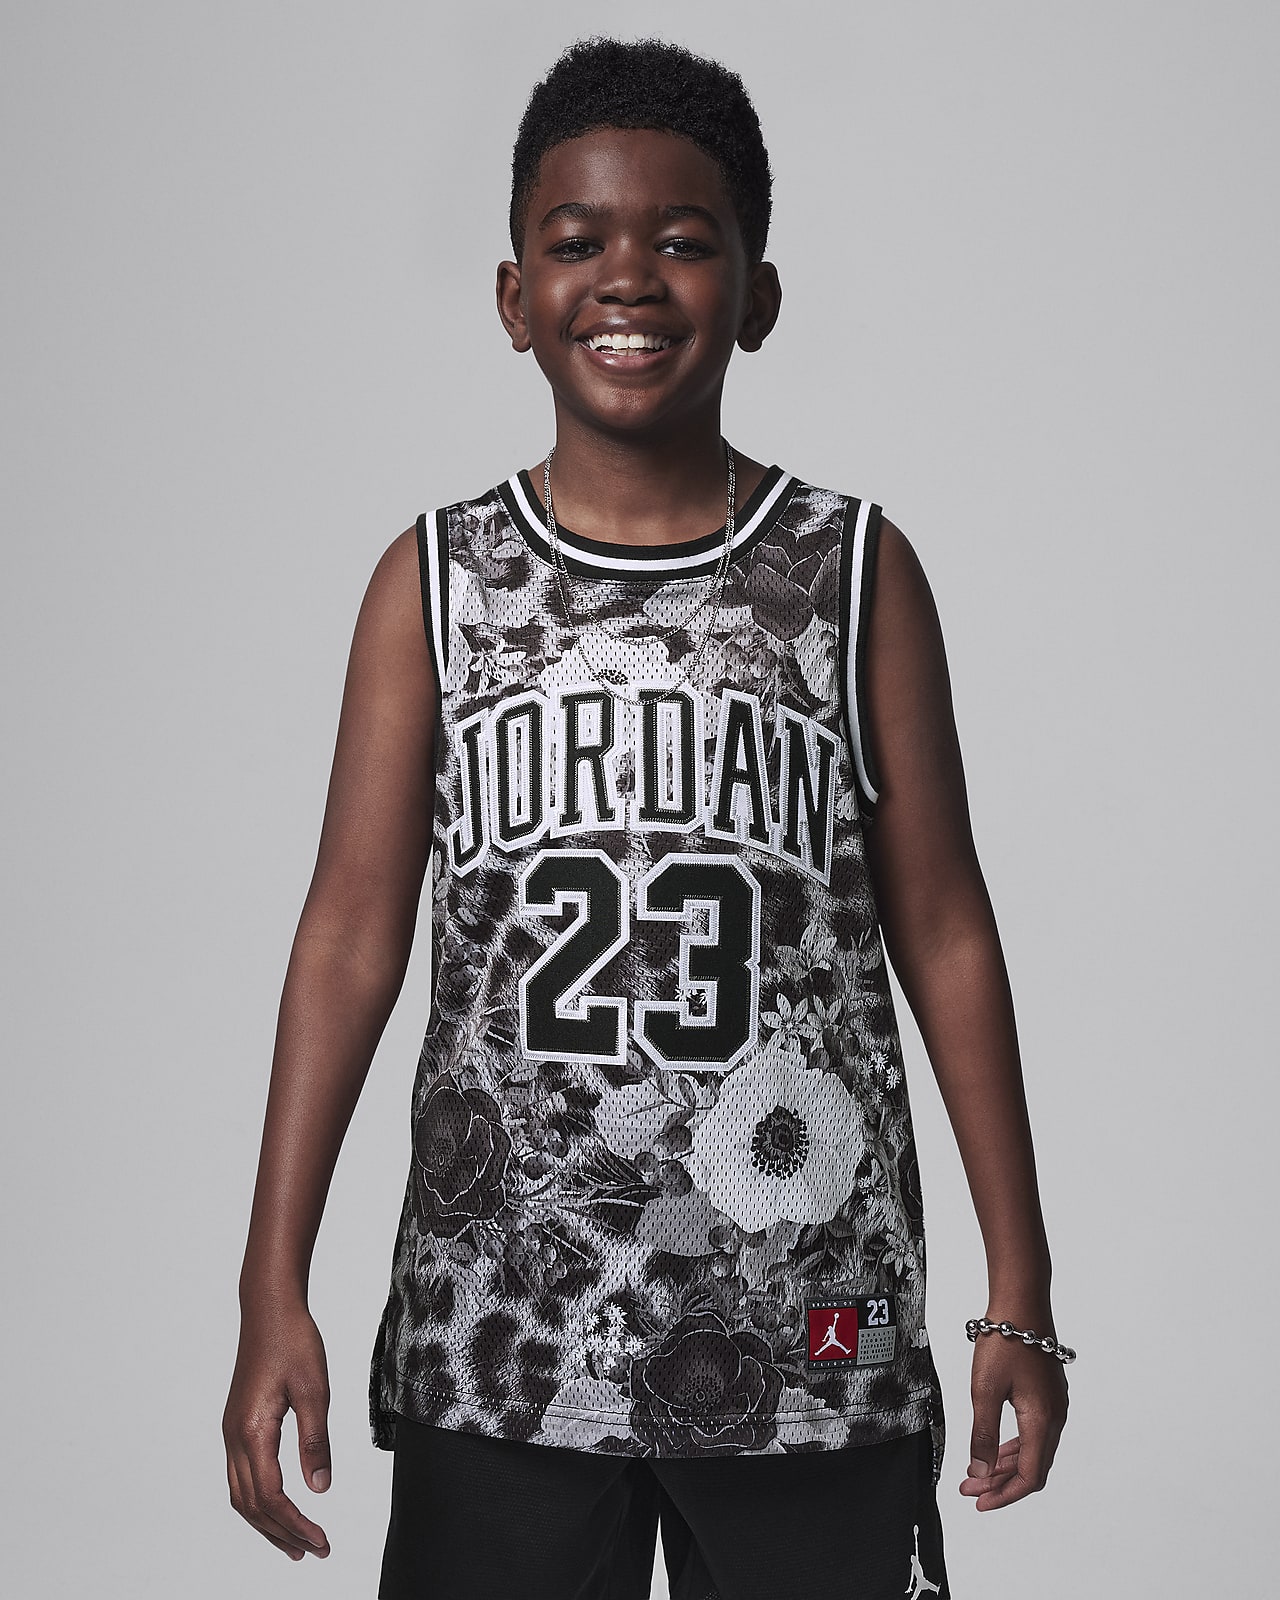 Jordan23 Big Kids' Printed Jersey